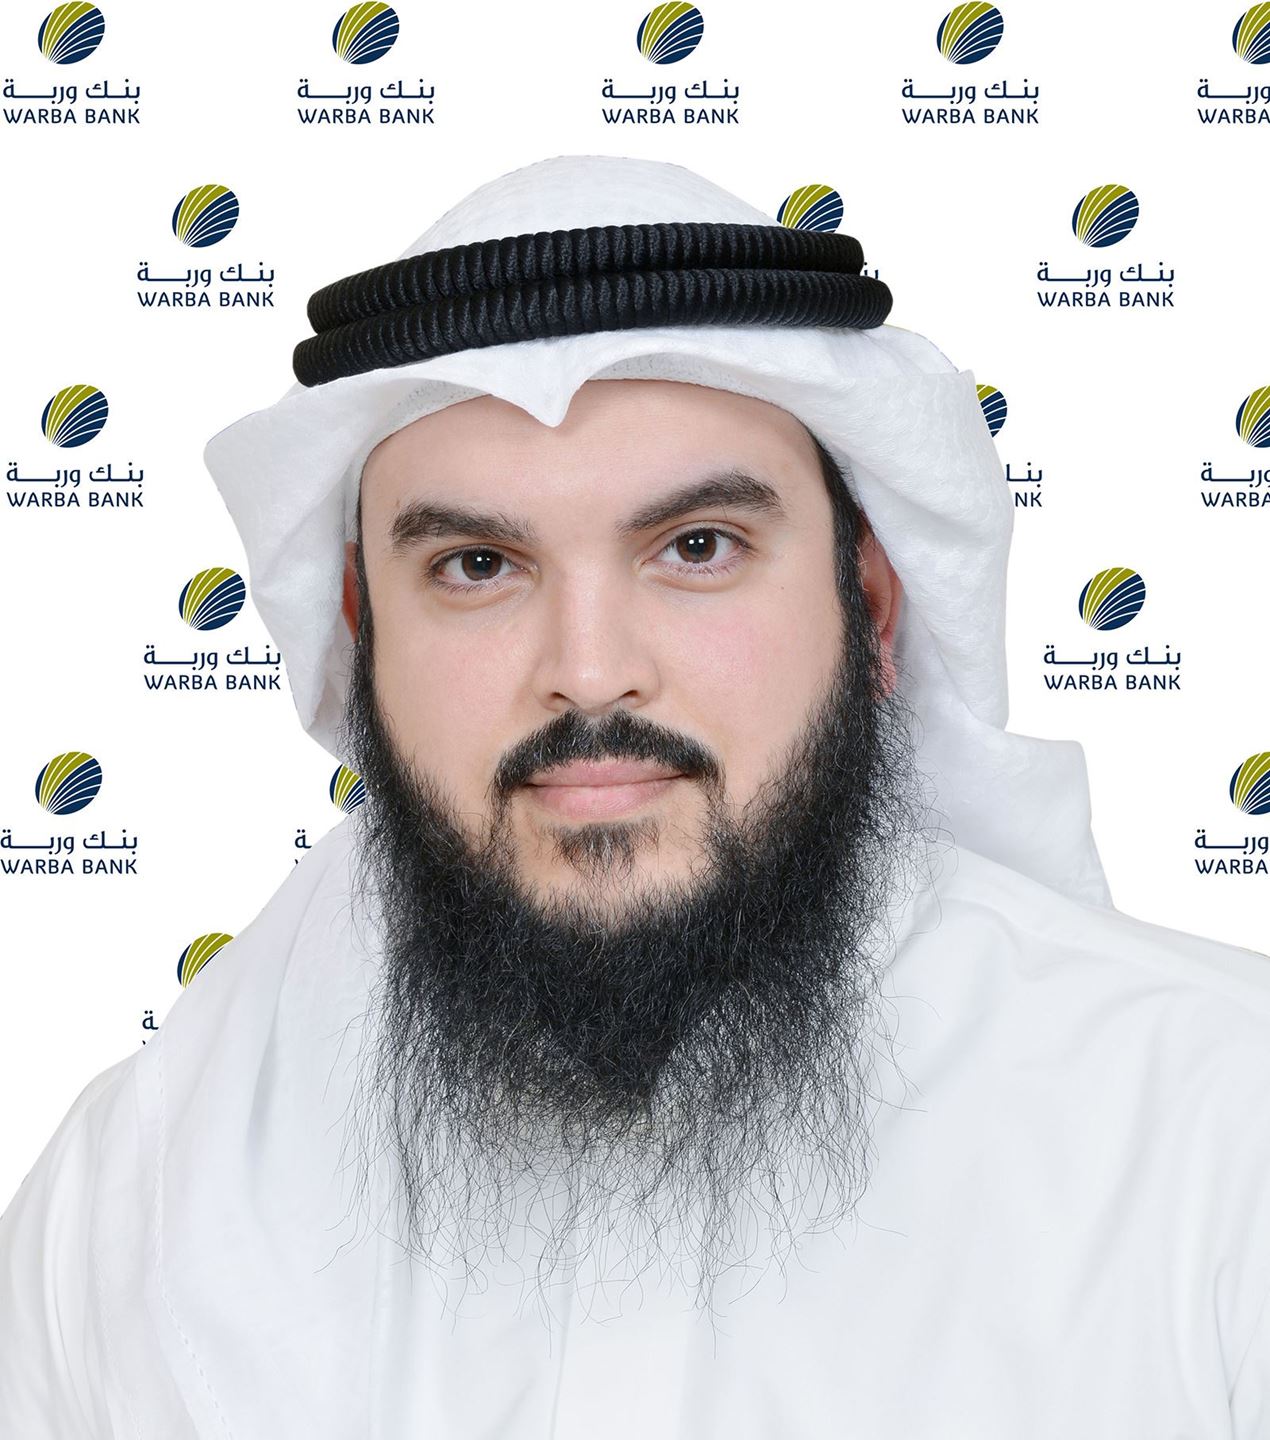 Mr. Thuwaini Khaled Al-Thuwaini, Deputy Chief Investment Banking Officer at Warba Bank